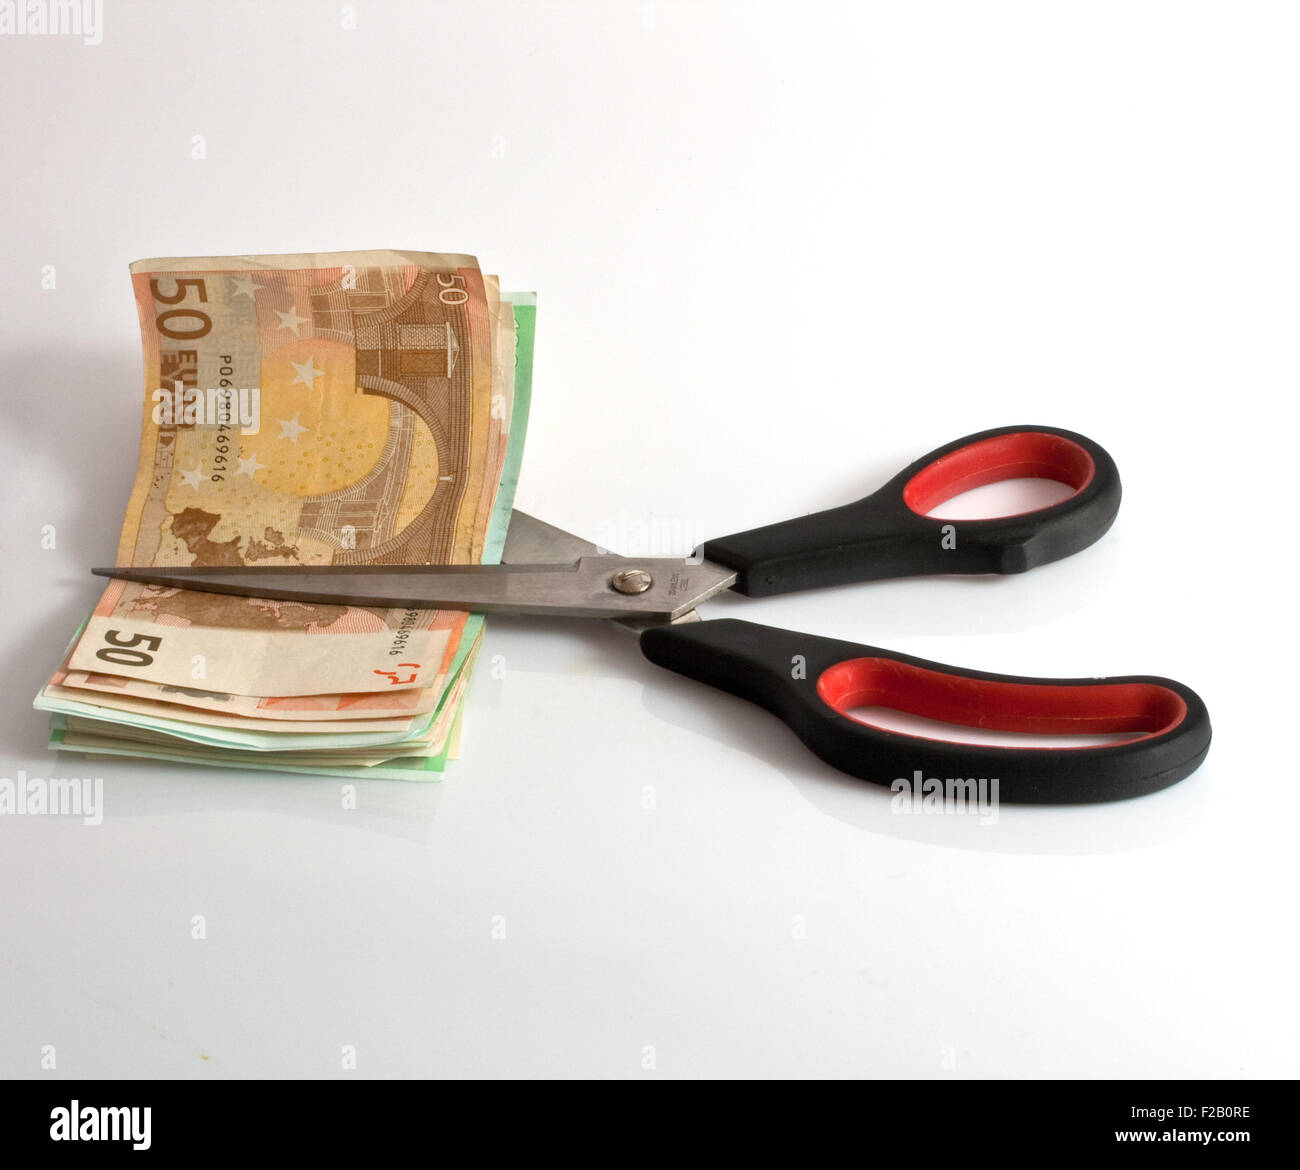 Scissors cutting the money, white background Stock Photo